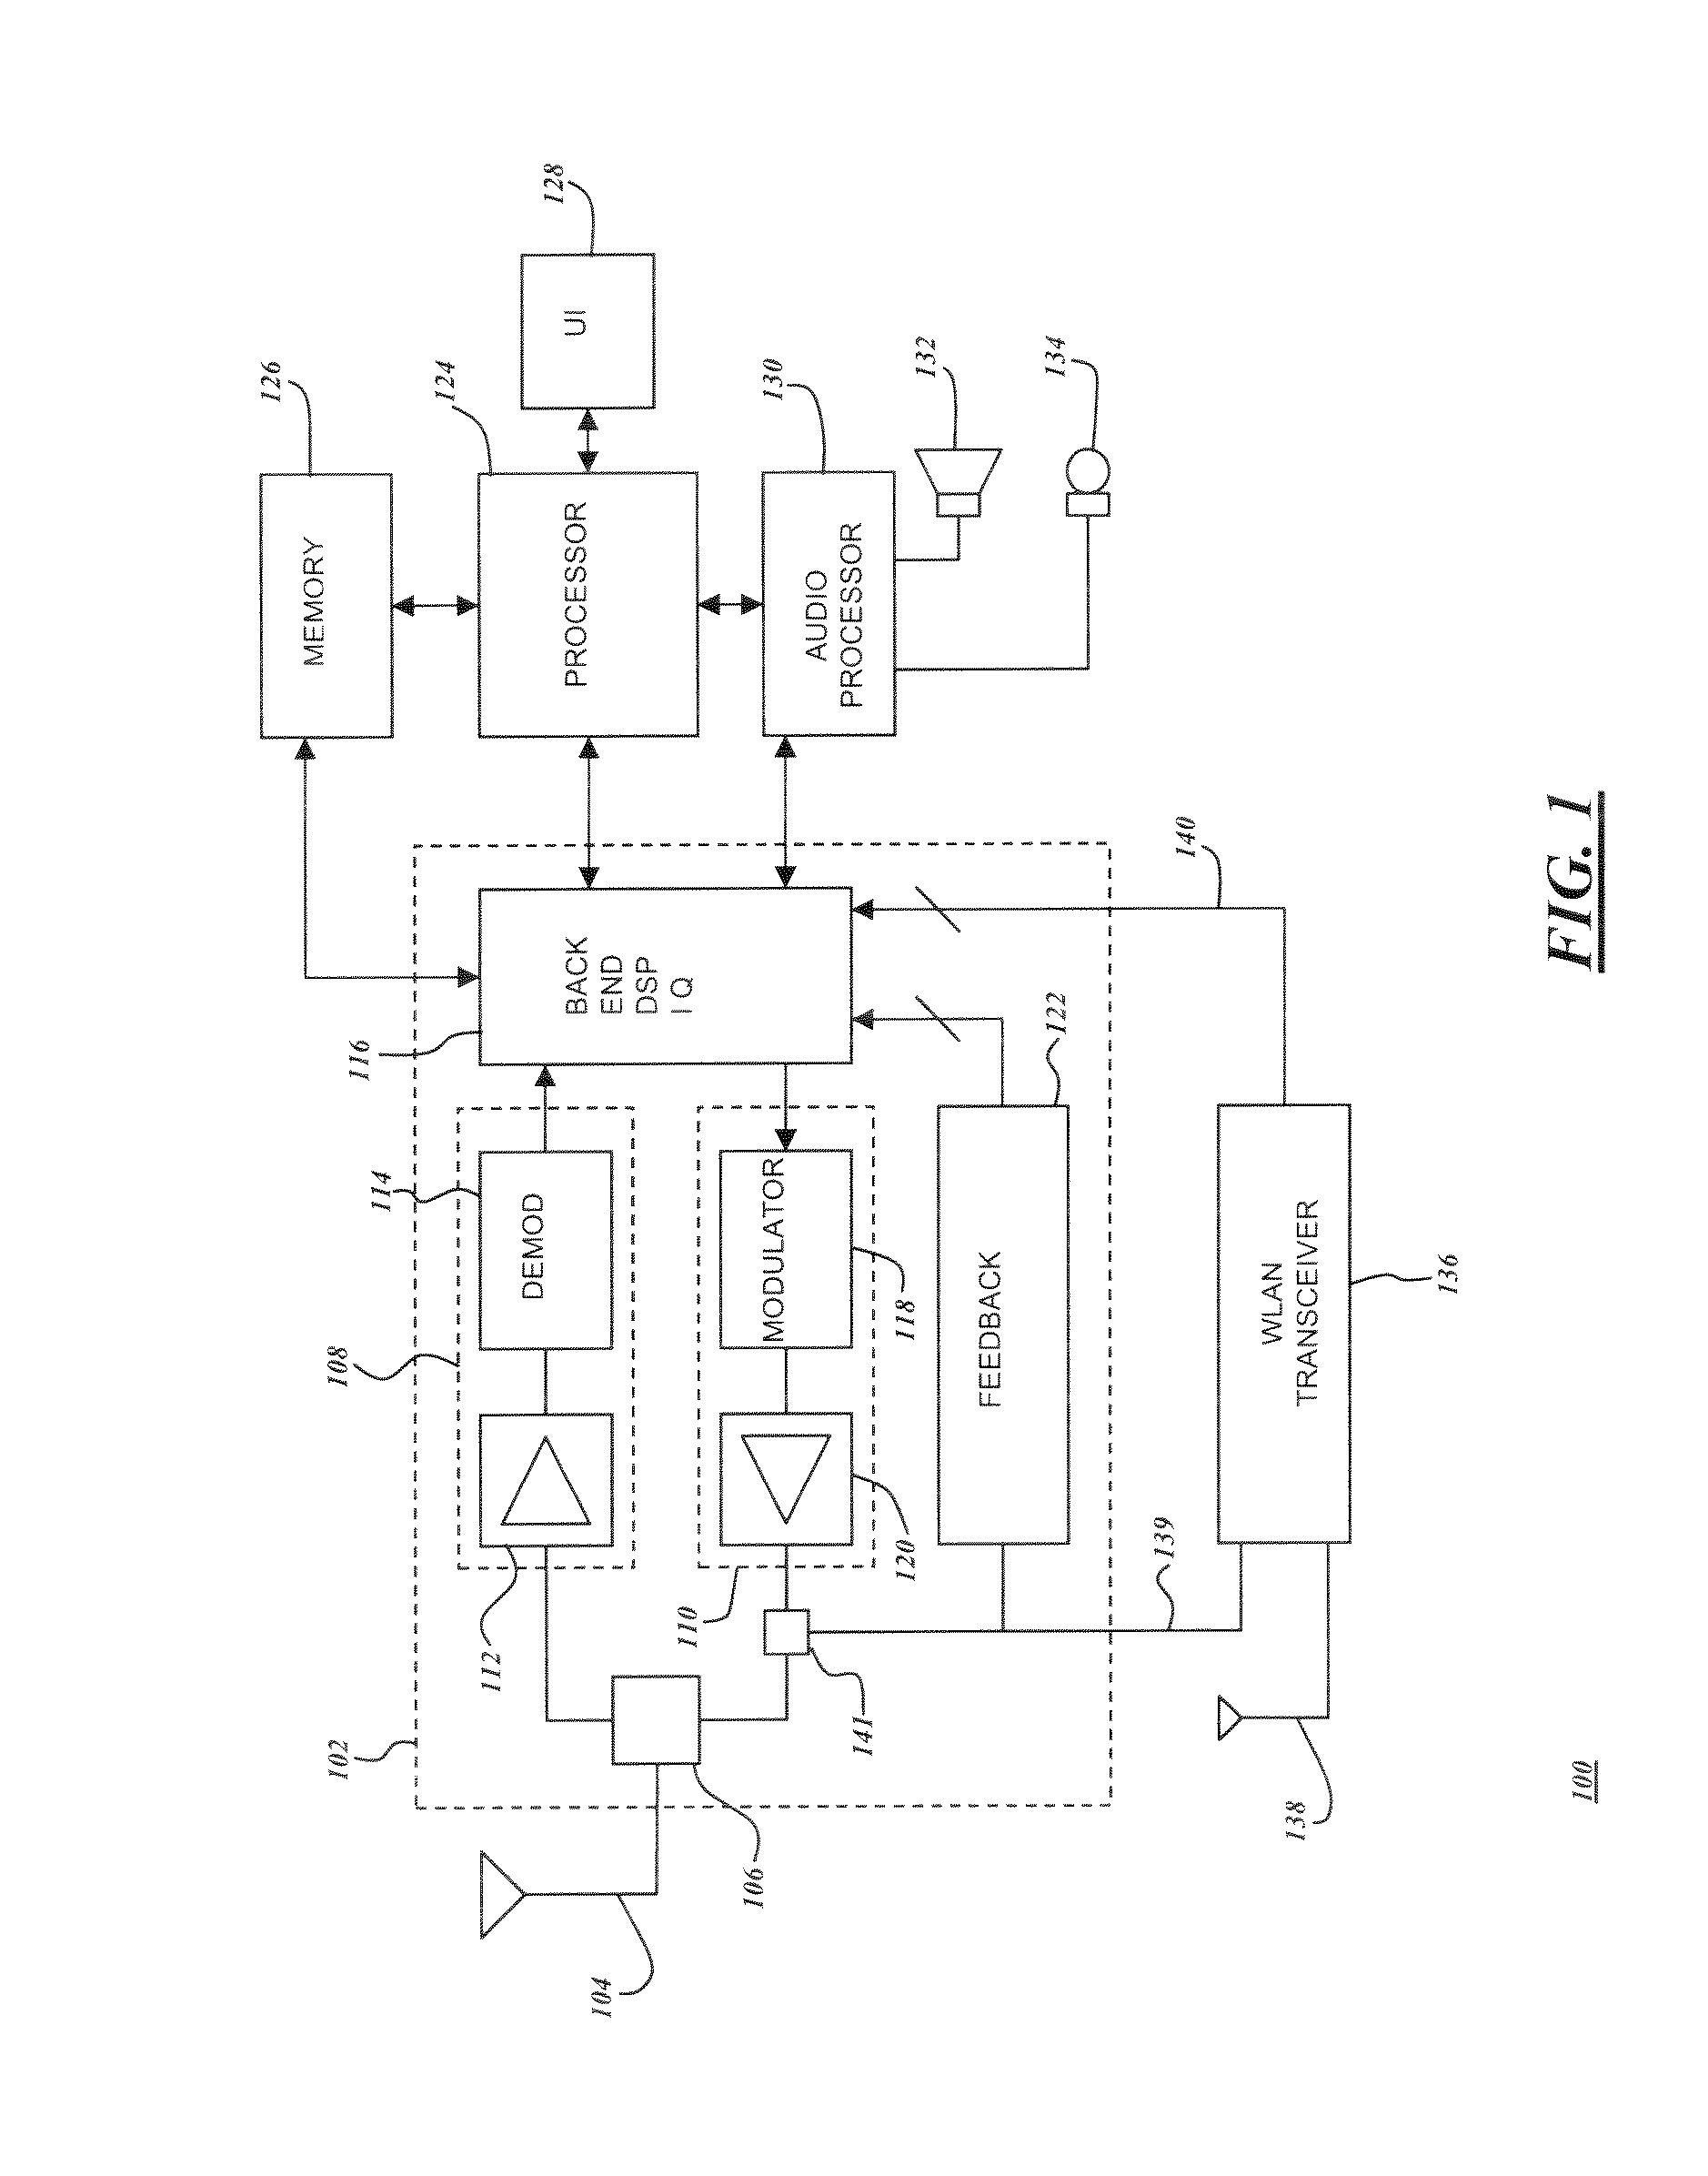 Method and device for generating constant envelope modulation using a quadrature modulator